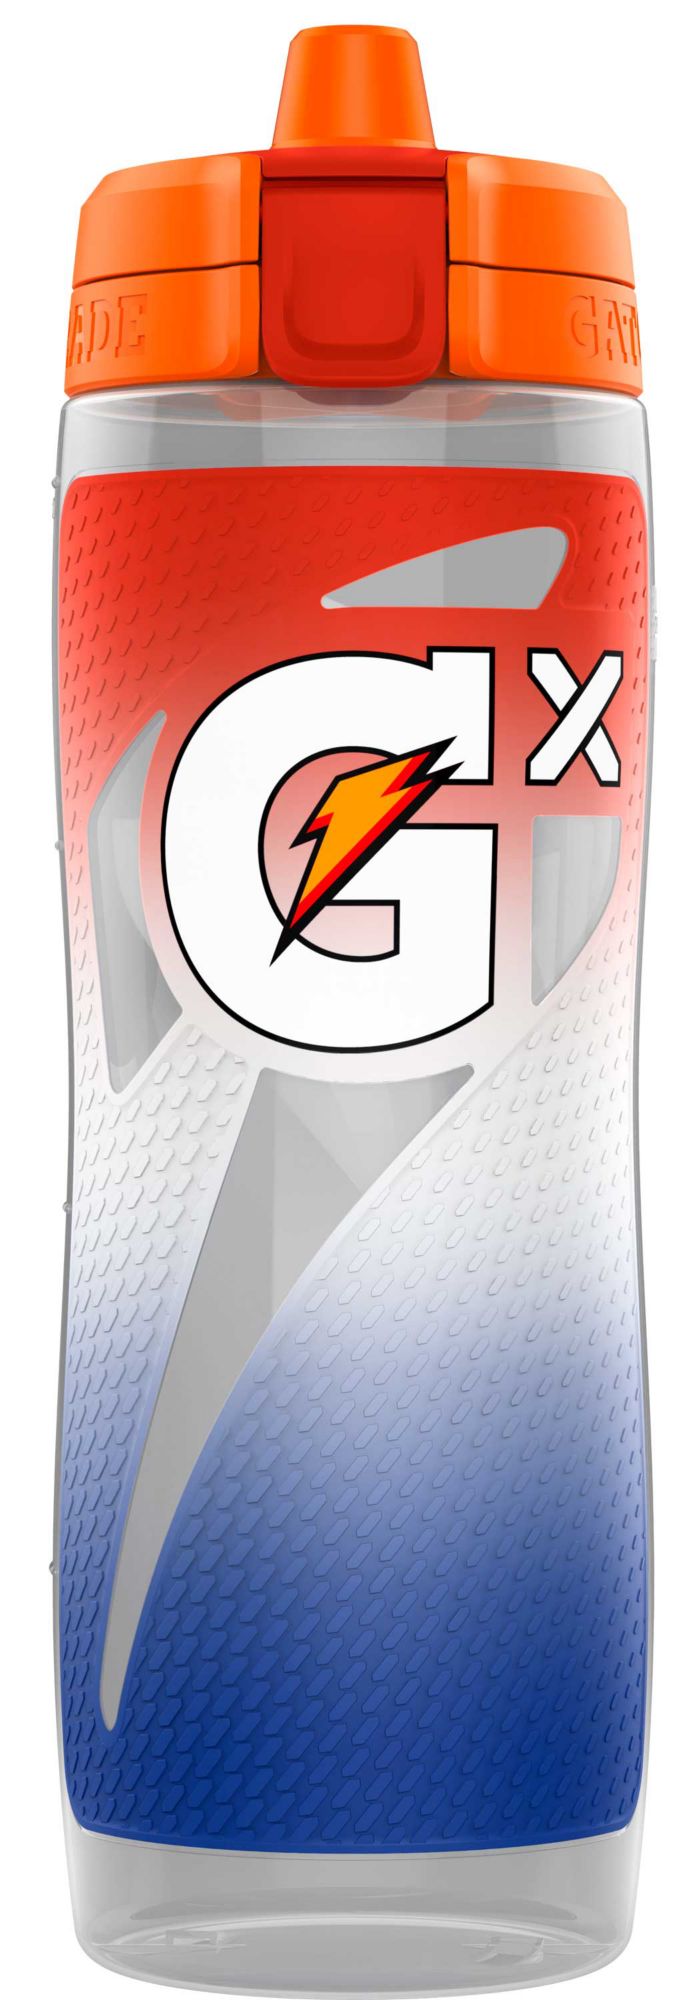 Gatorade GX Bottle 30oz Red